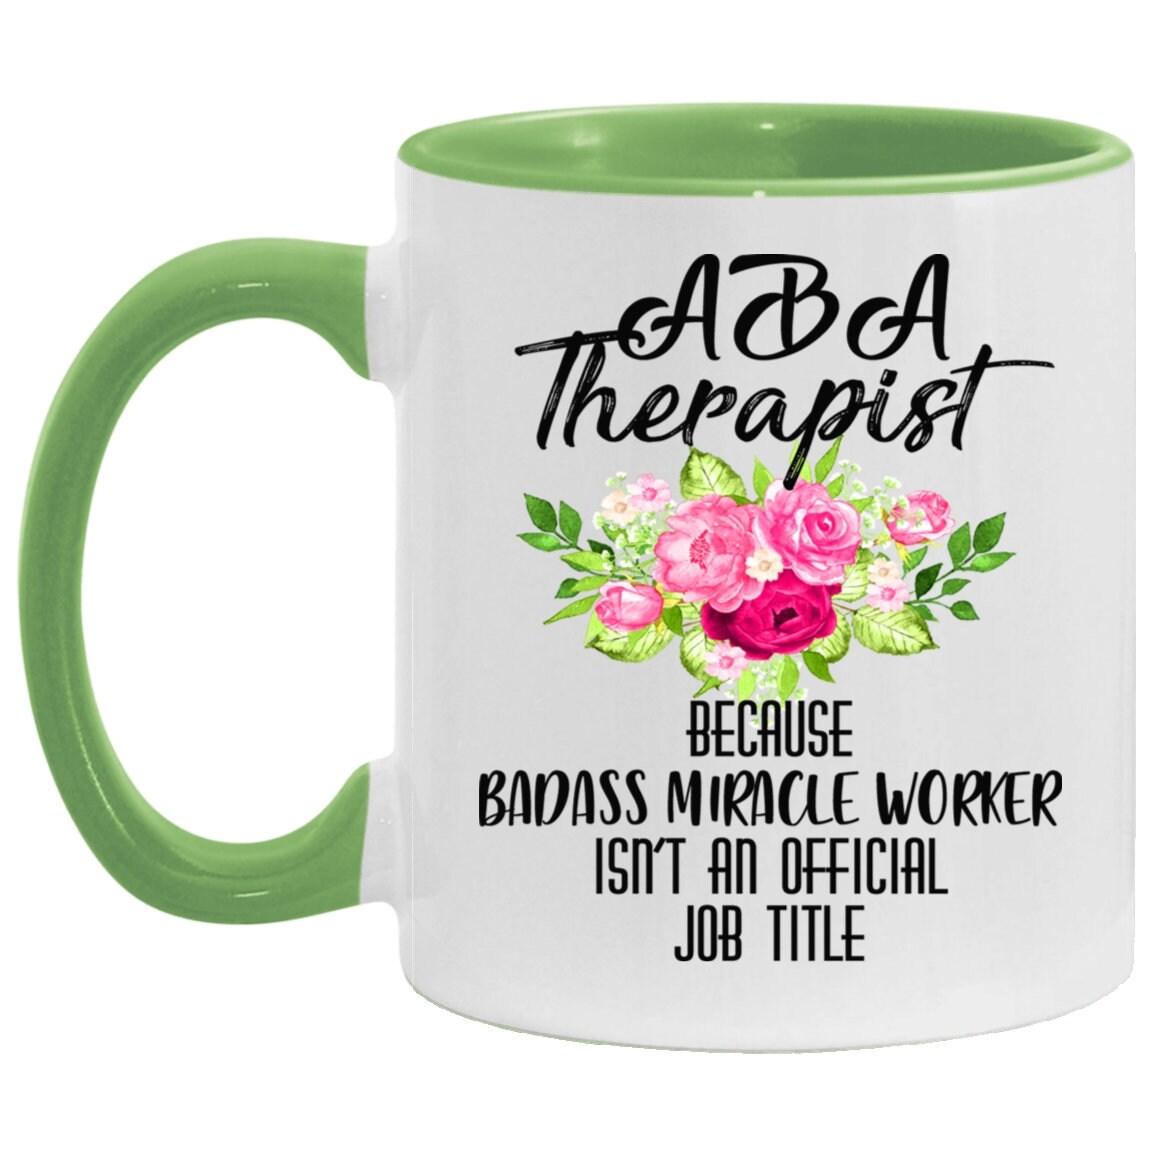 aba terapeut Accent Krus || bcba gaver || Adfærdsterapeutkrus - Fordi Badass Miracle Worker ikke er en officiel jobtitel - plusminusco.com